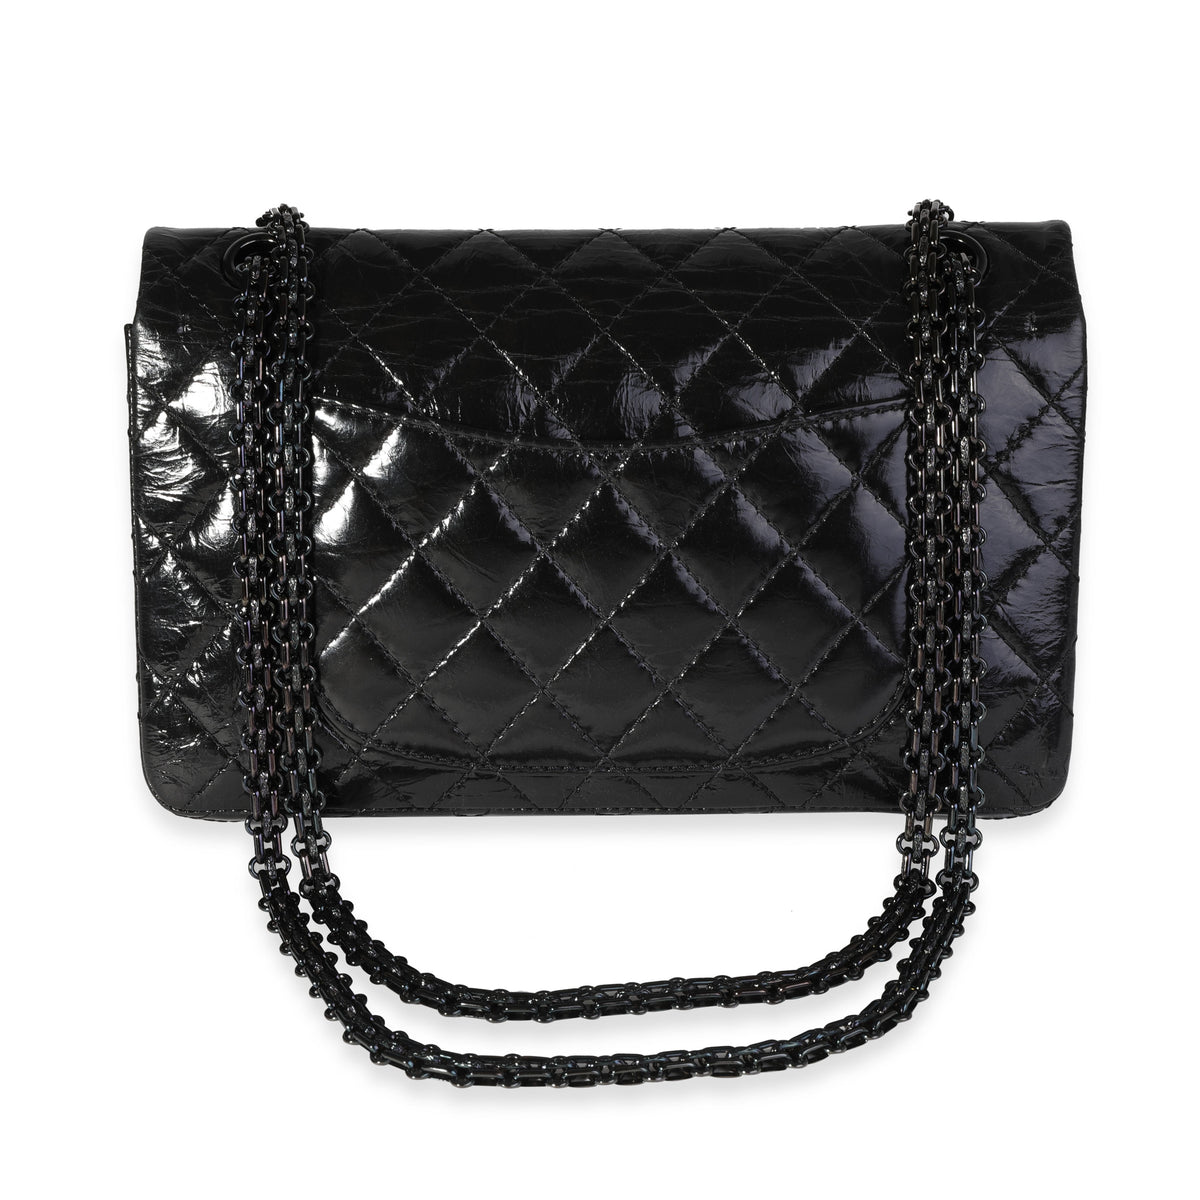 Chanel Reissue So Black bag black patent leather